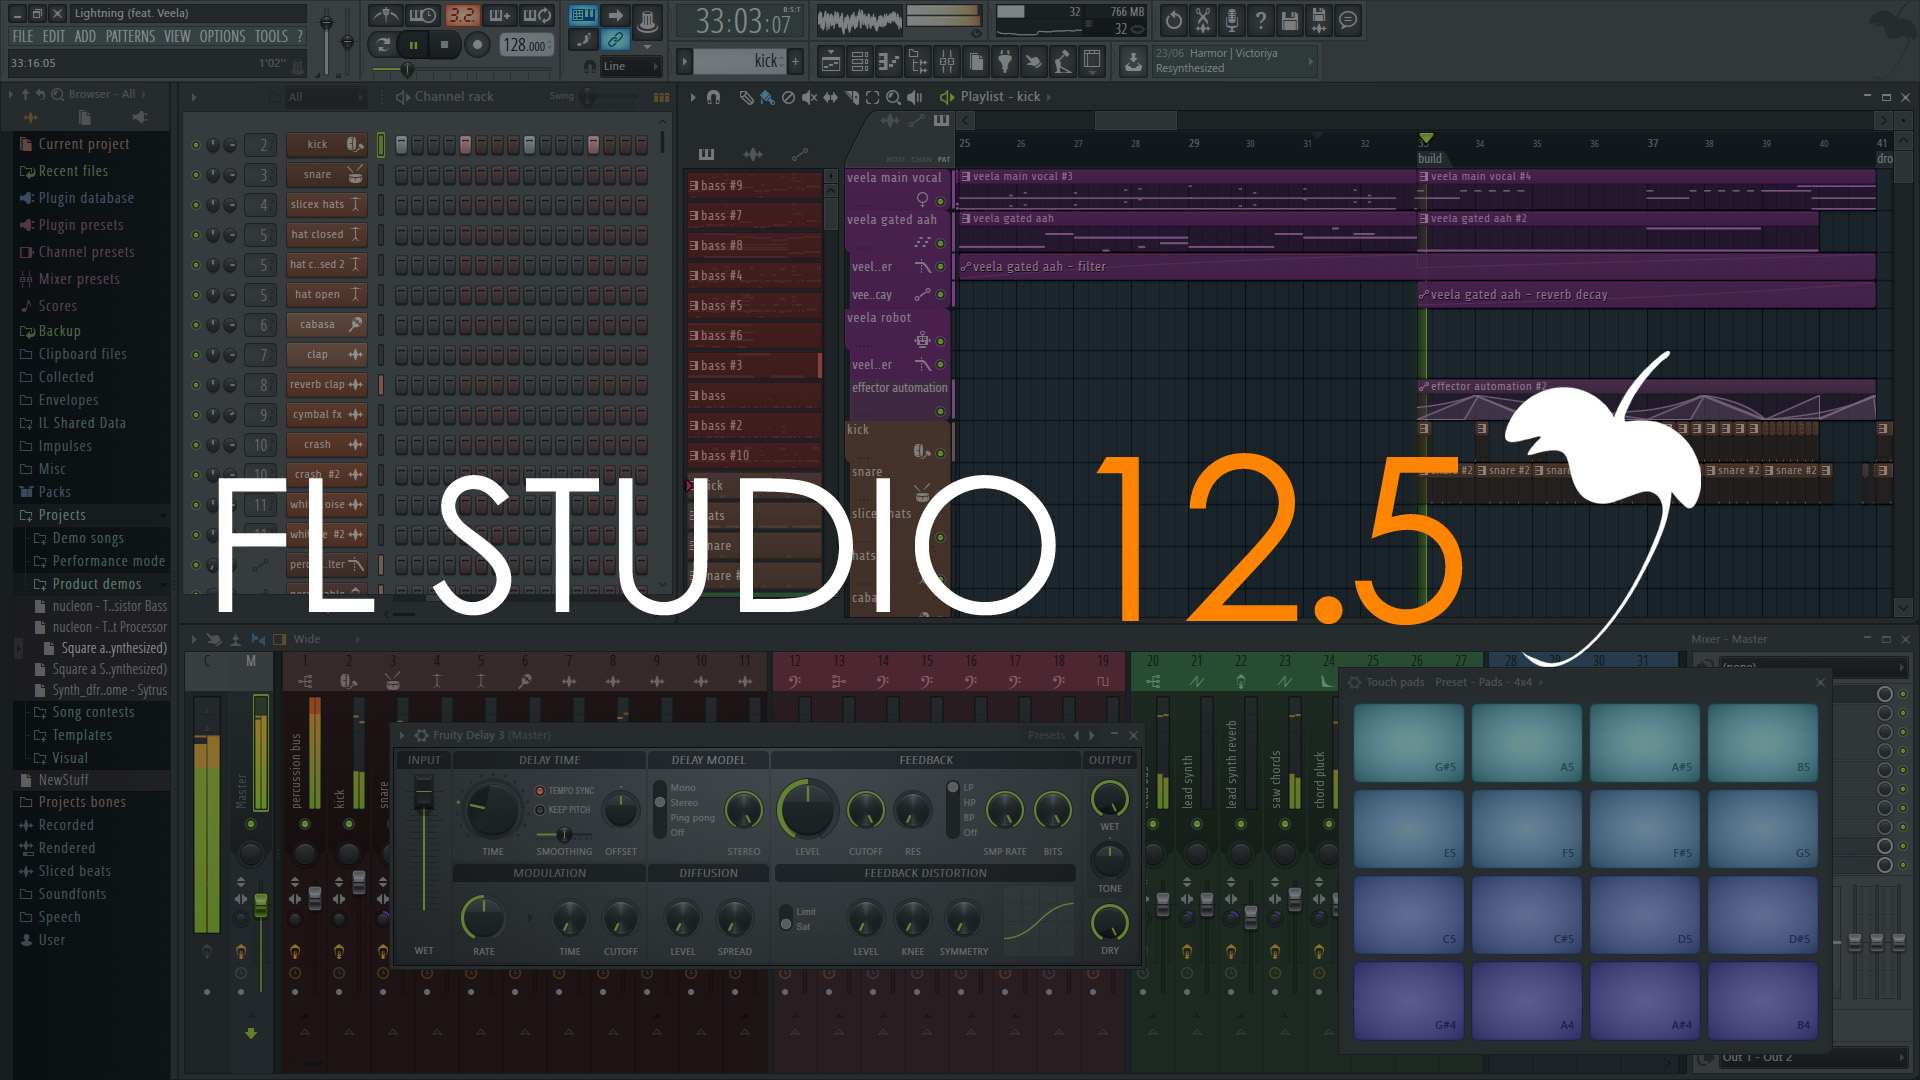 Fl studio 20 producer edition free download